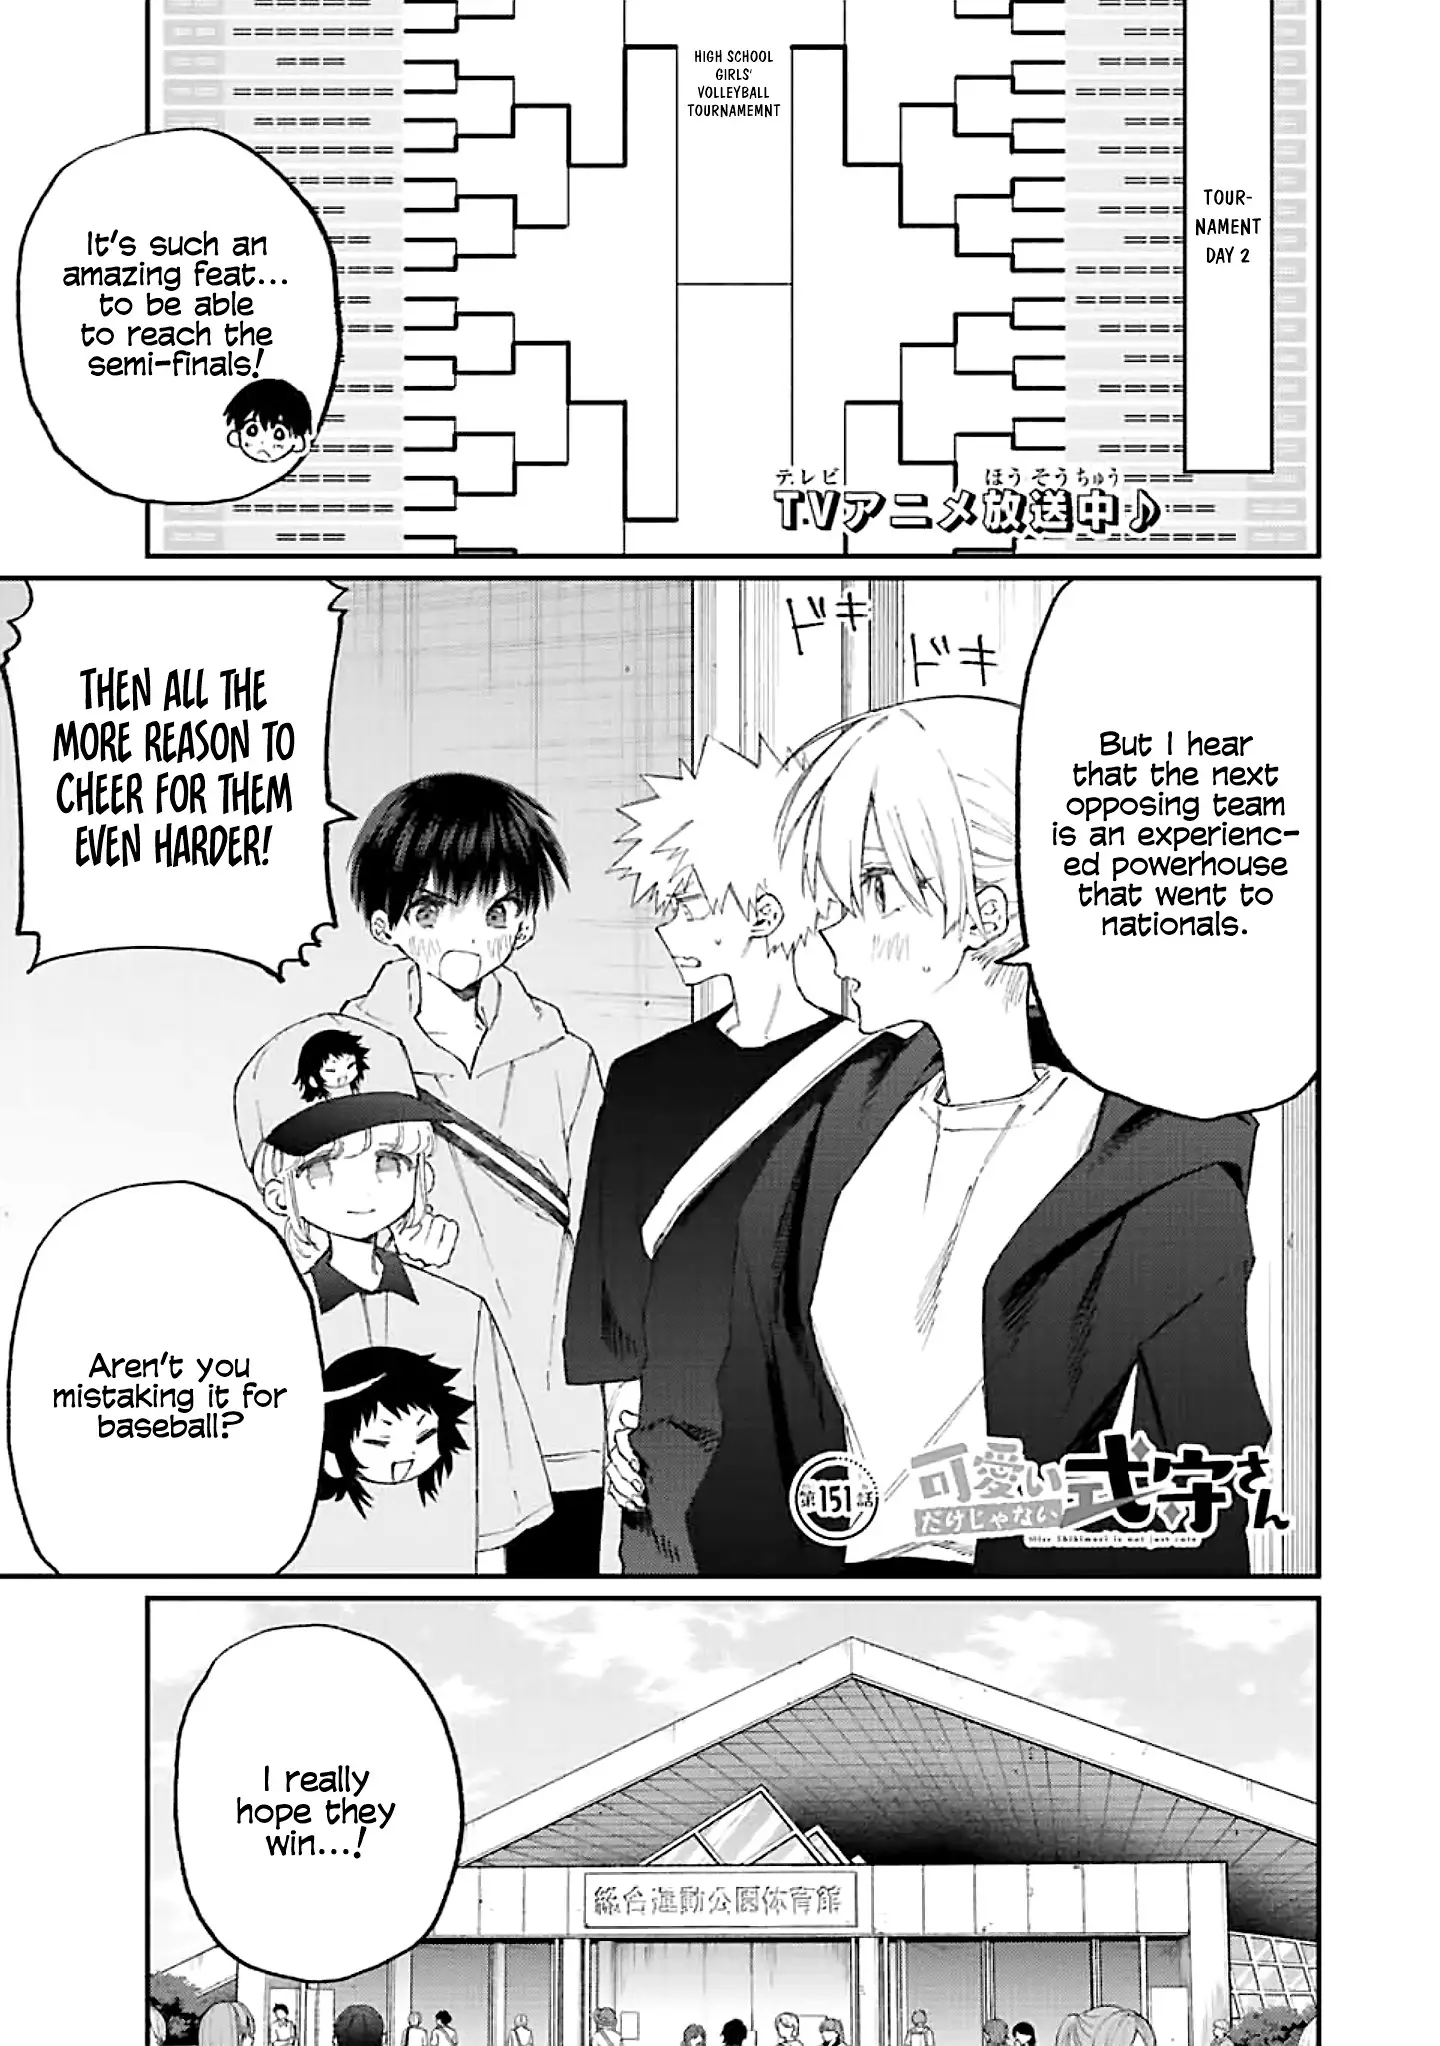 Shikimori's Not Just A Cutie - 151 page 1-3ba6e14e